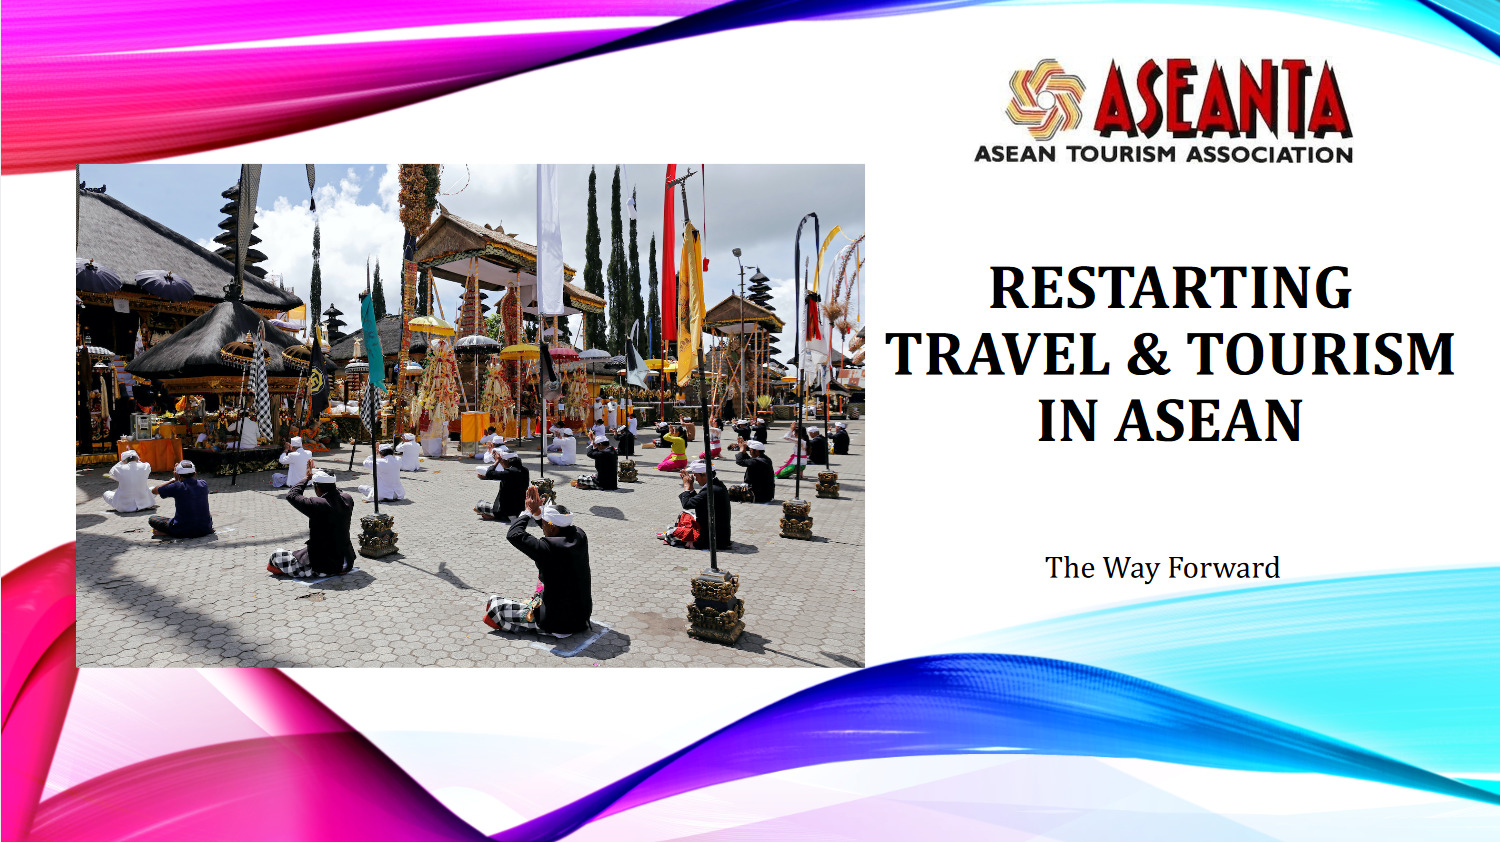 asean tourism association (aseanta)